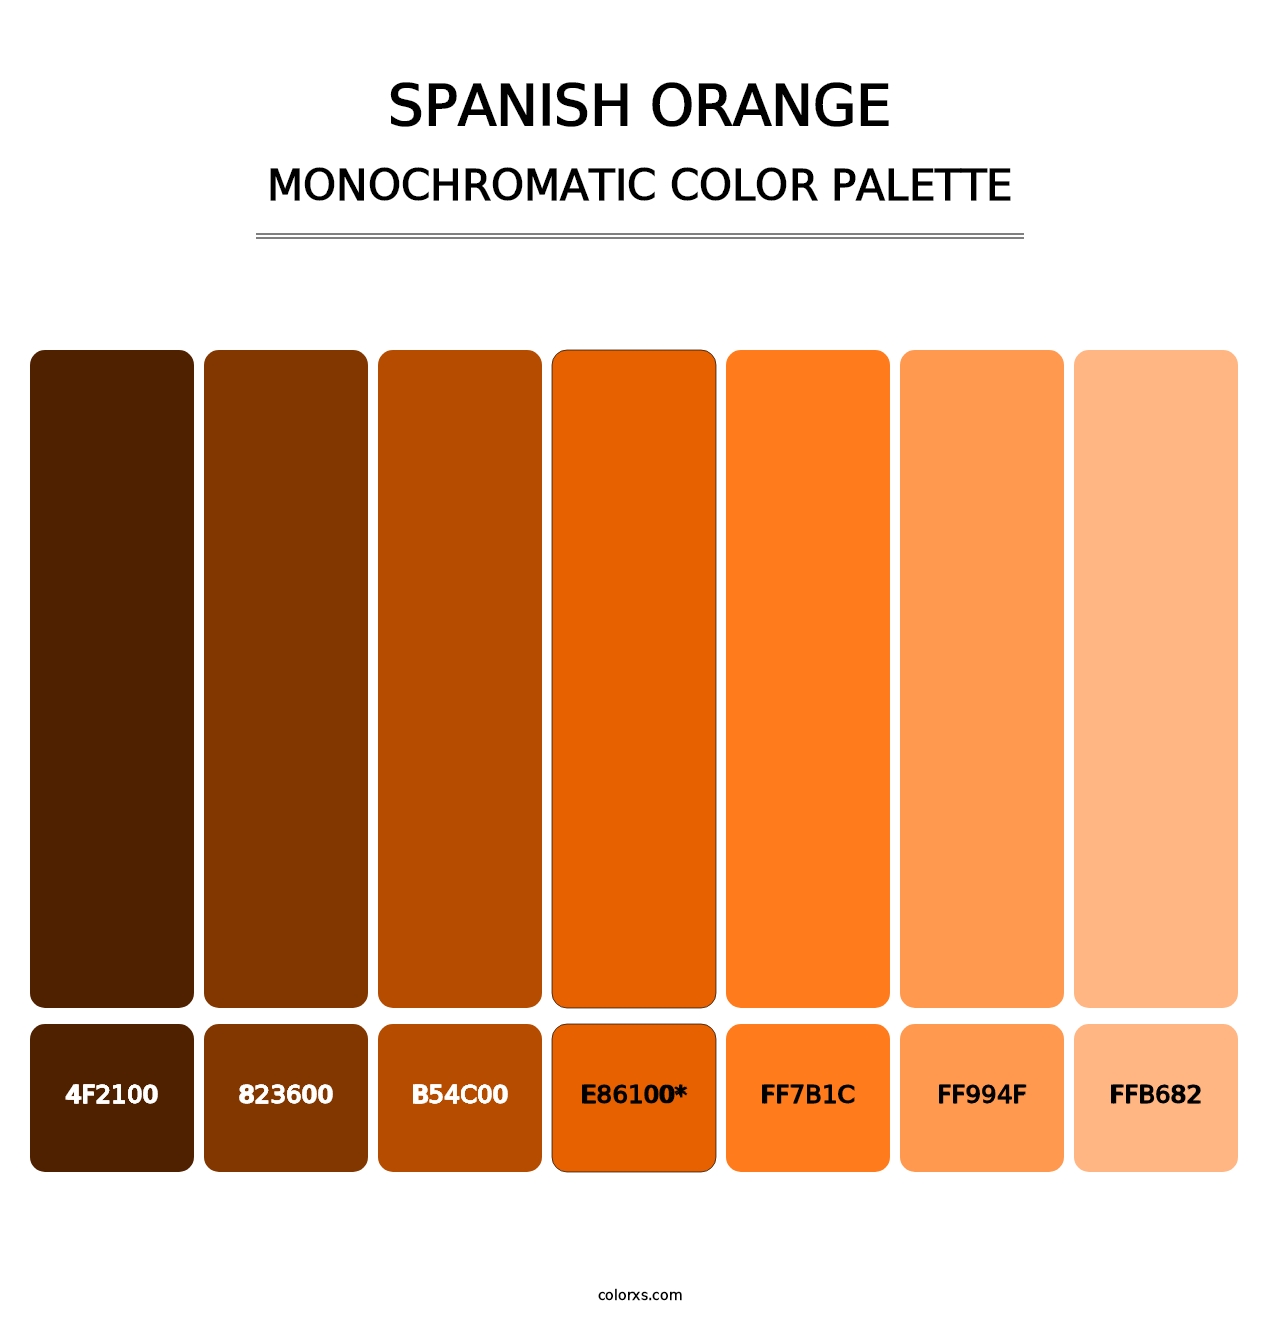 Spanish Orange - Monochromatic Color Palette